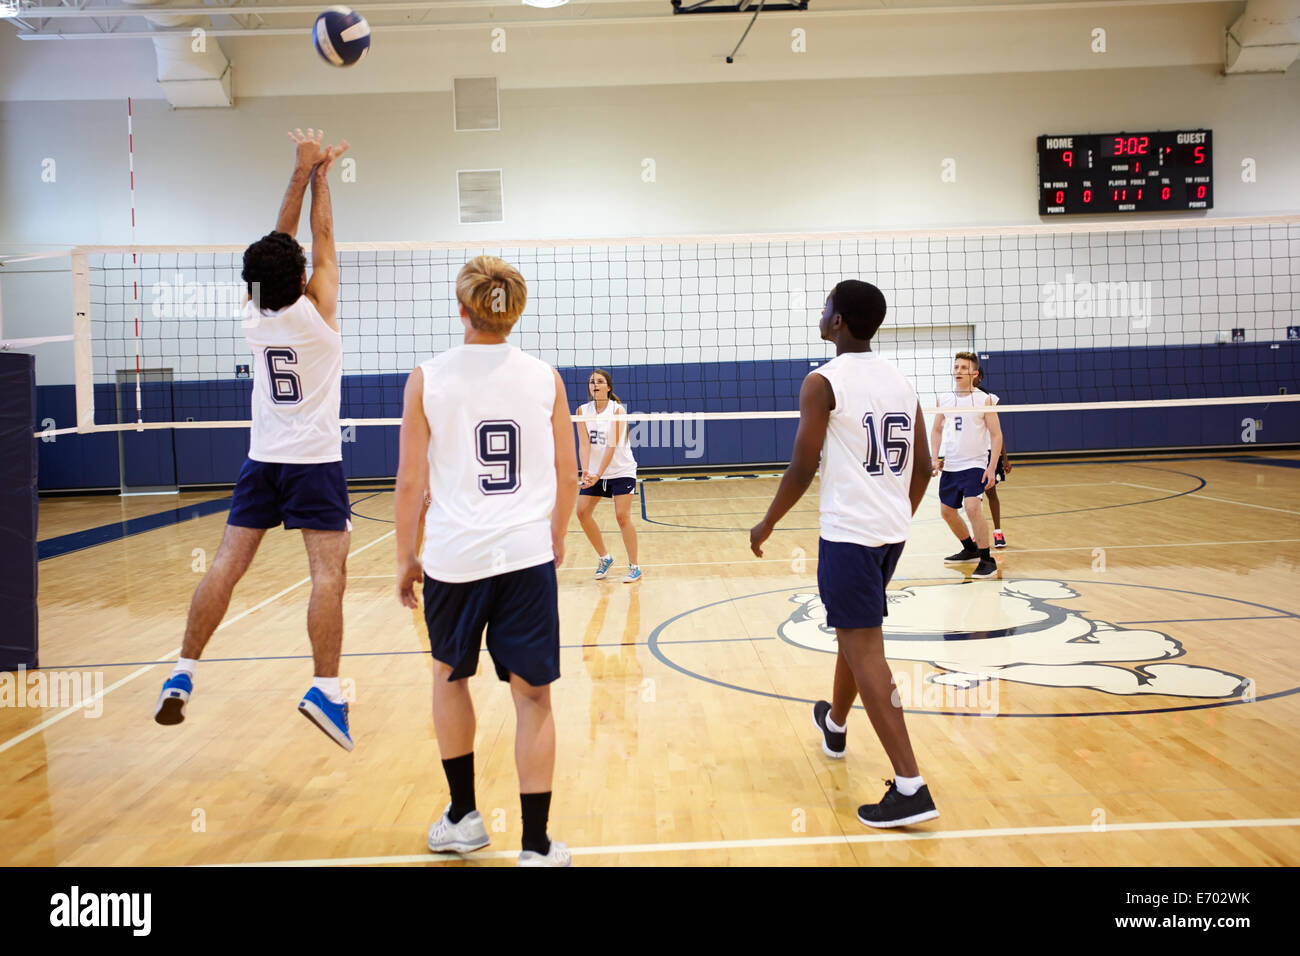 High School Volleyball Match In Gymnasium Stock Photo